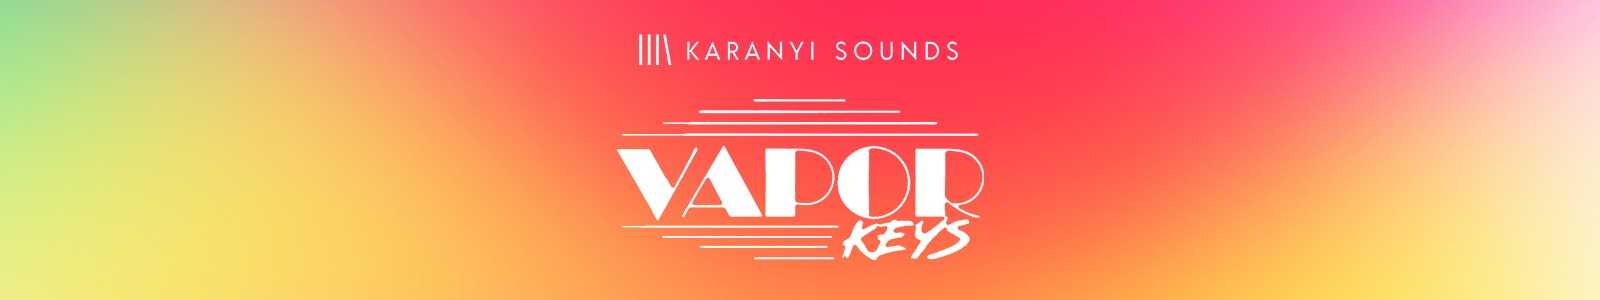 Karanyi Sounds Vapor Keys Enhanced